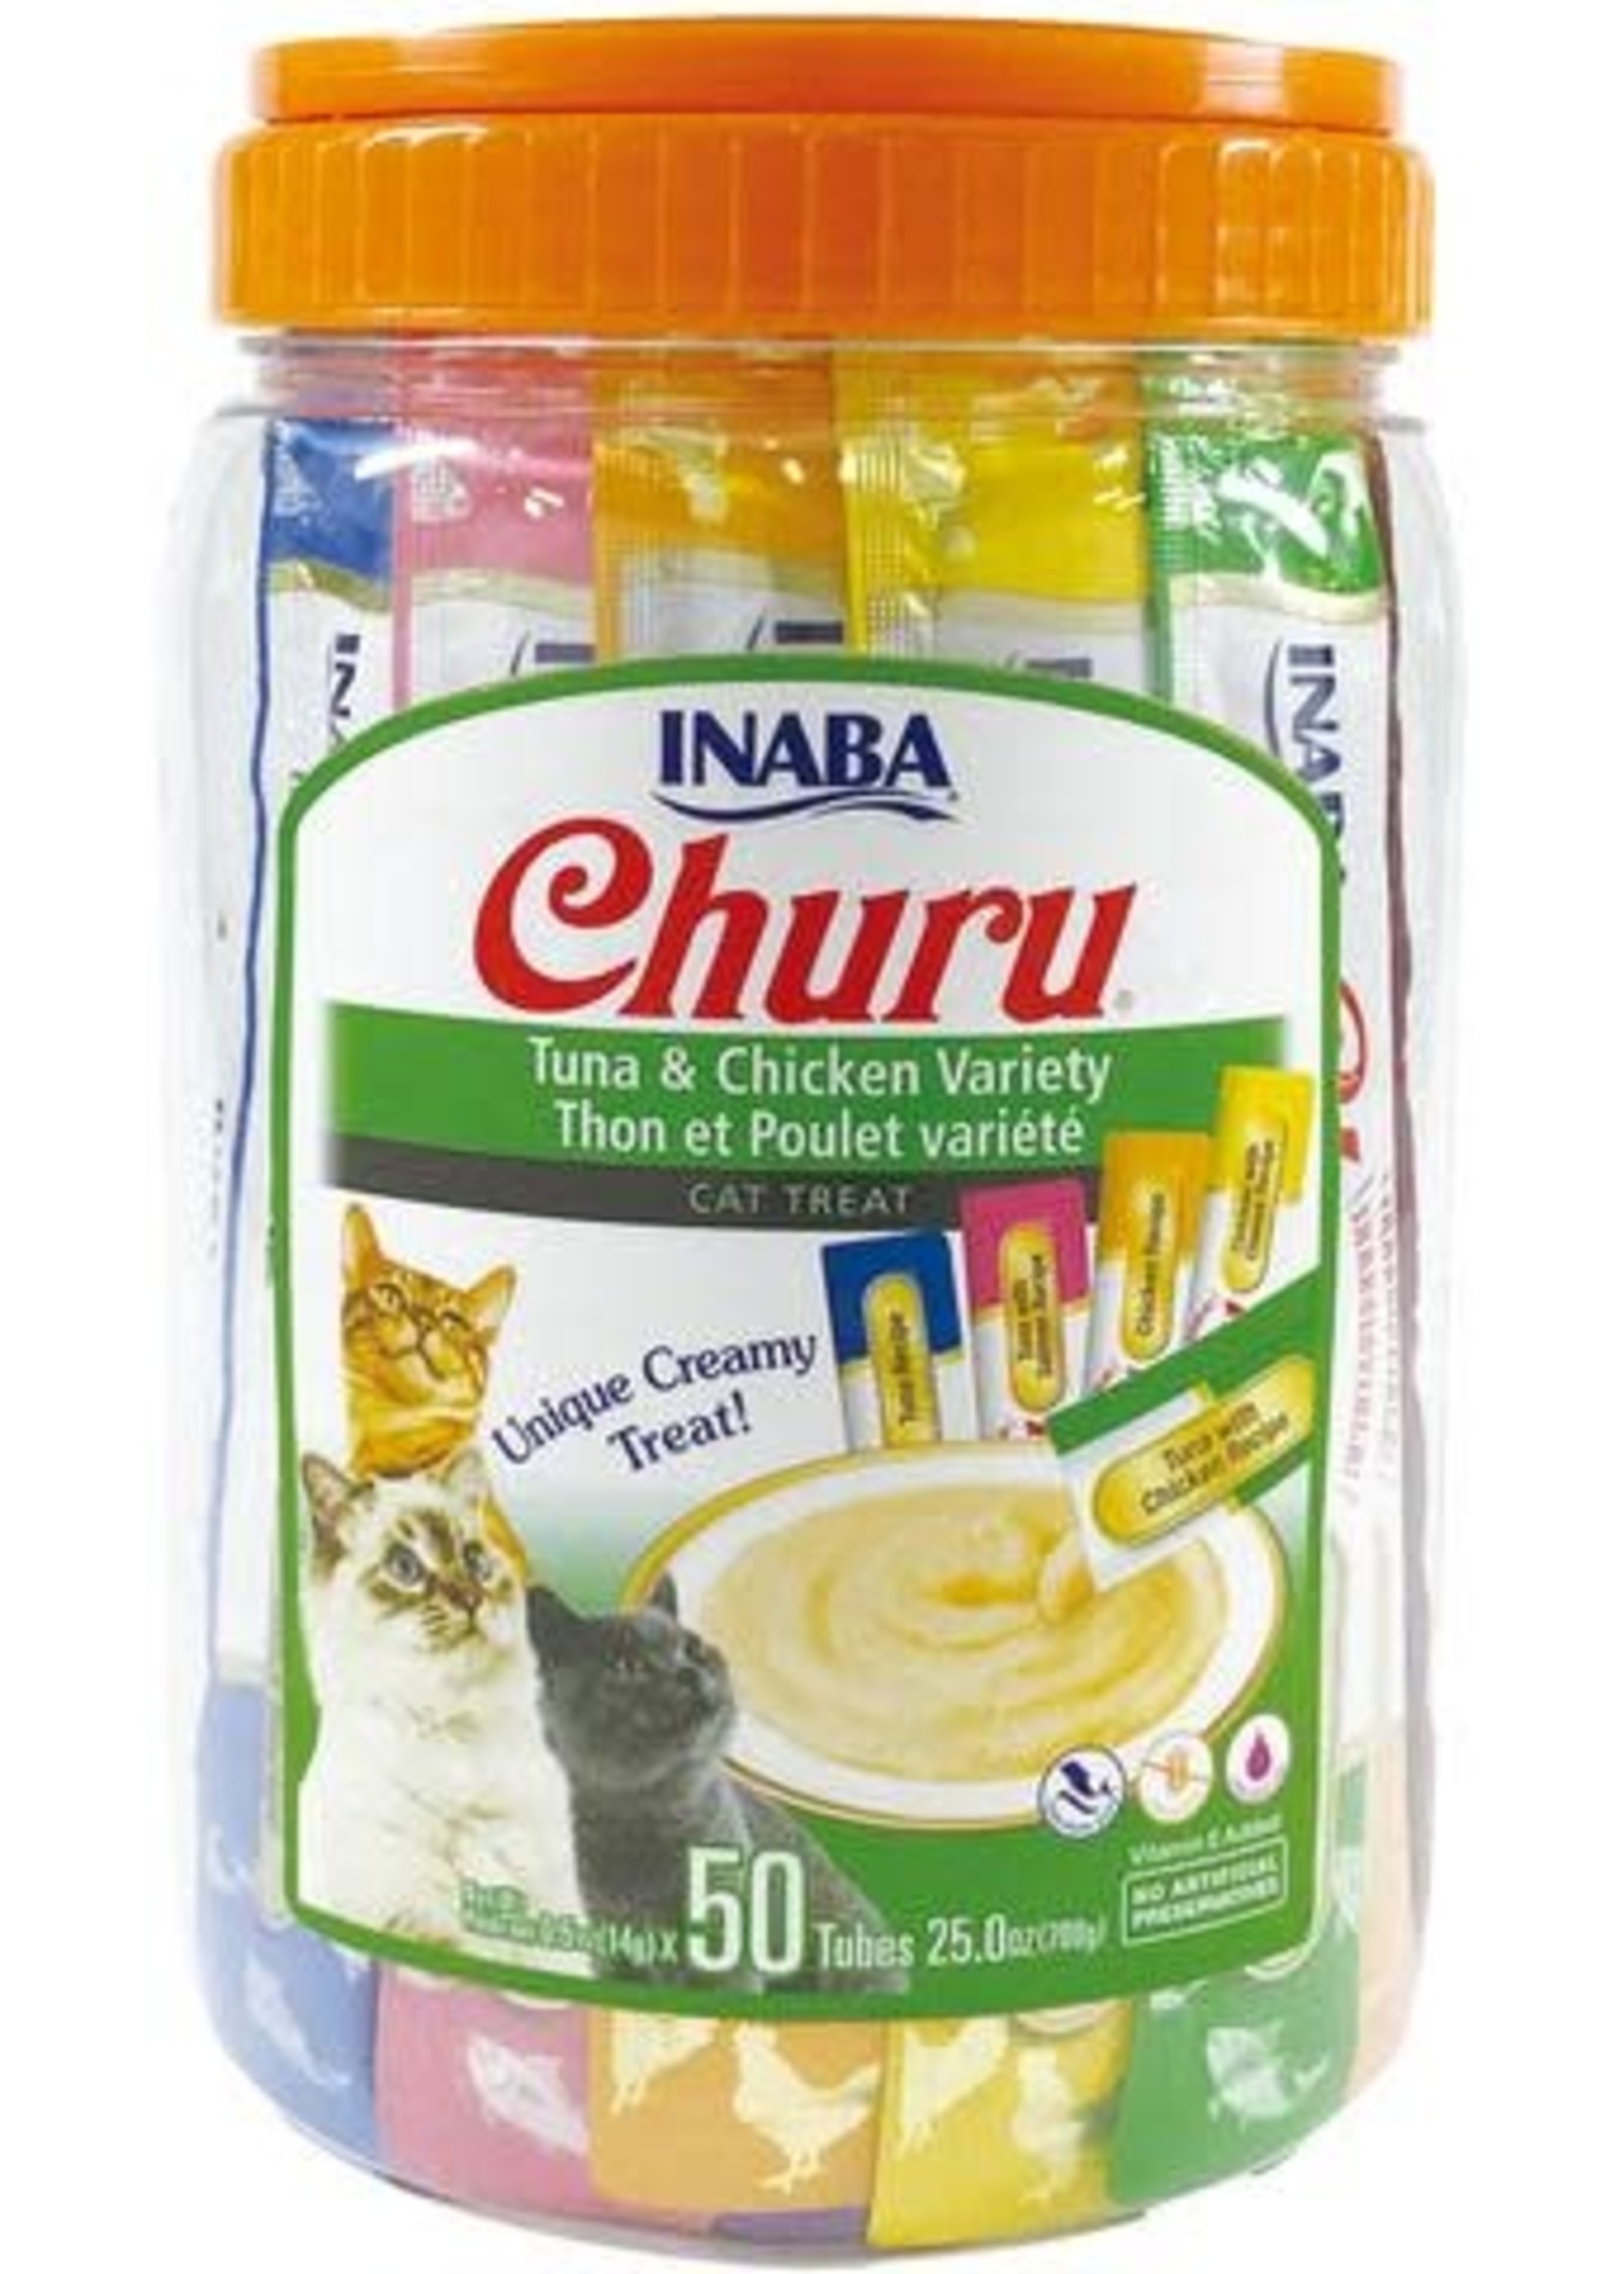 Inaba Churu Purees Tuna & Chicken Variety 50 ct